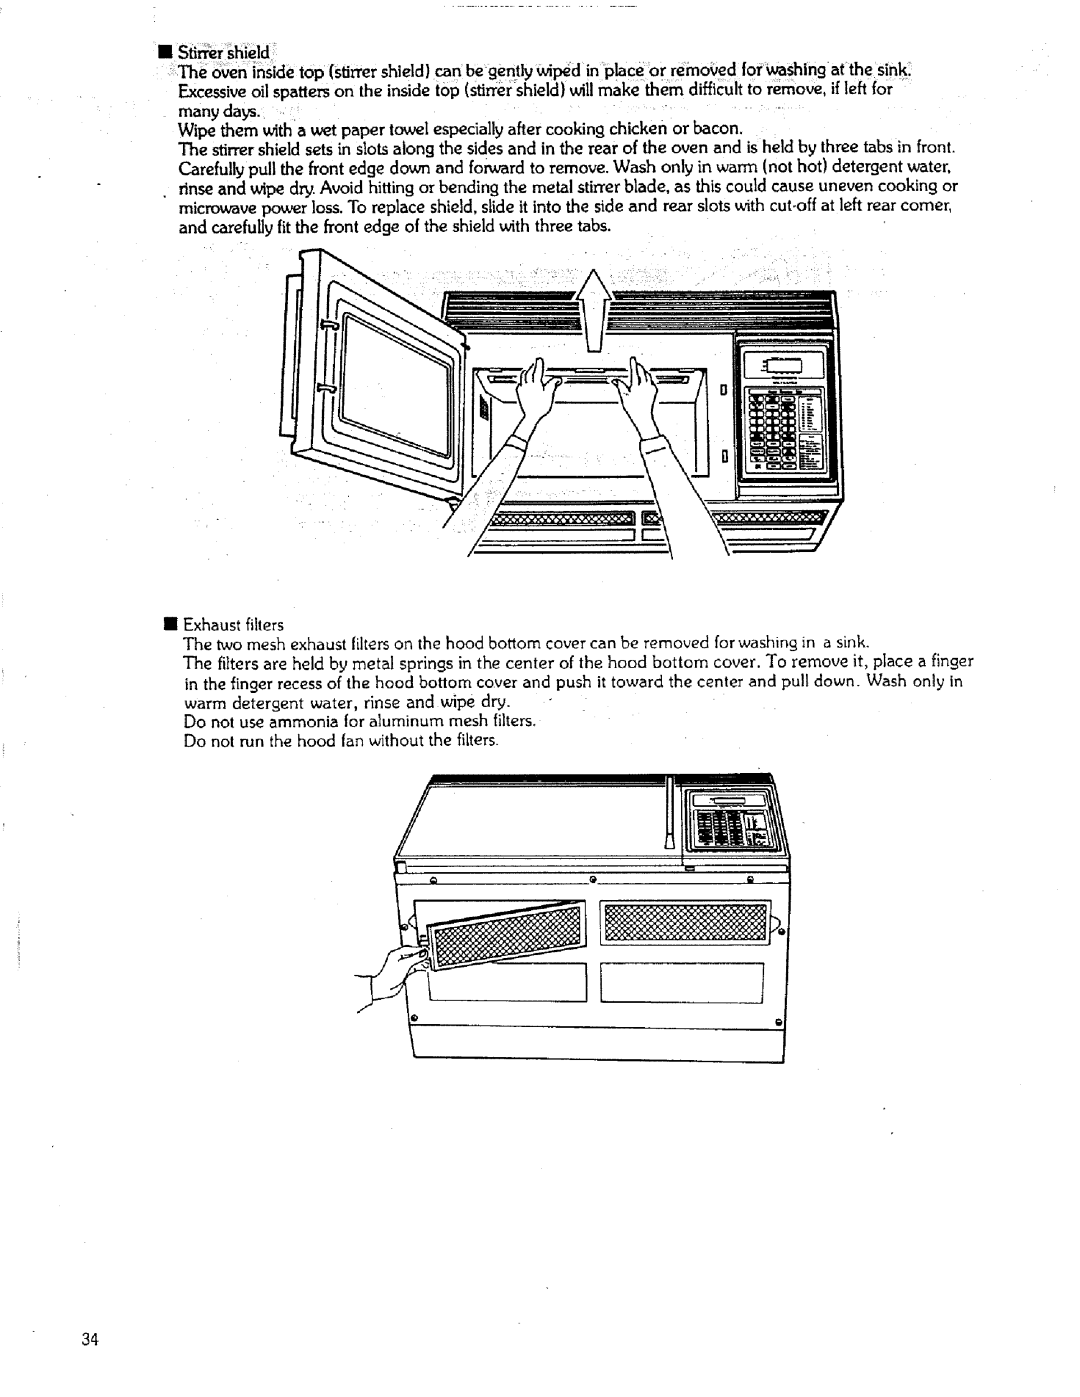 Sears 85951 manual •Stirrer shield 